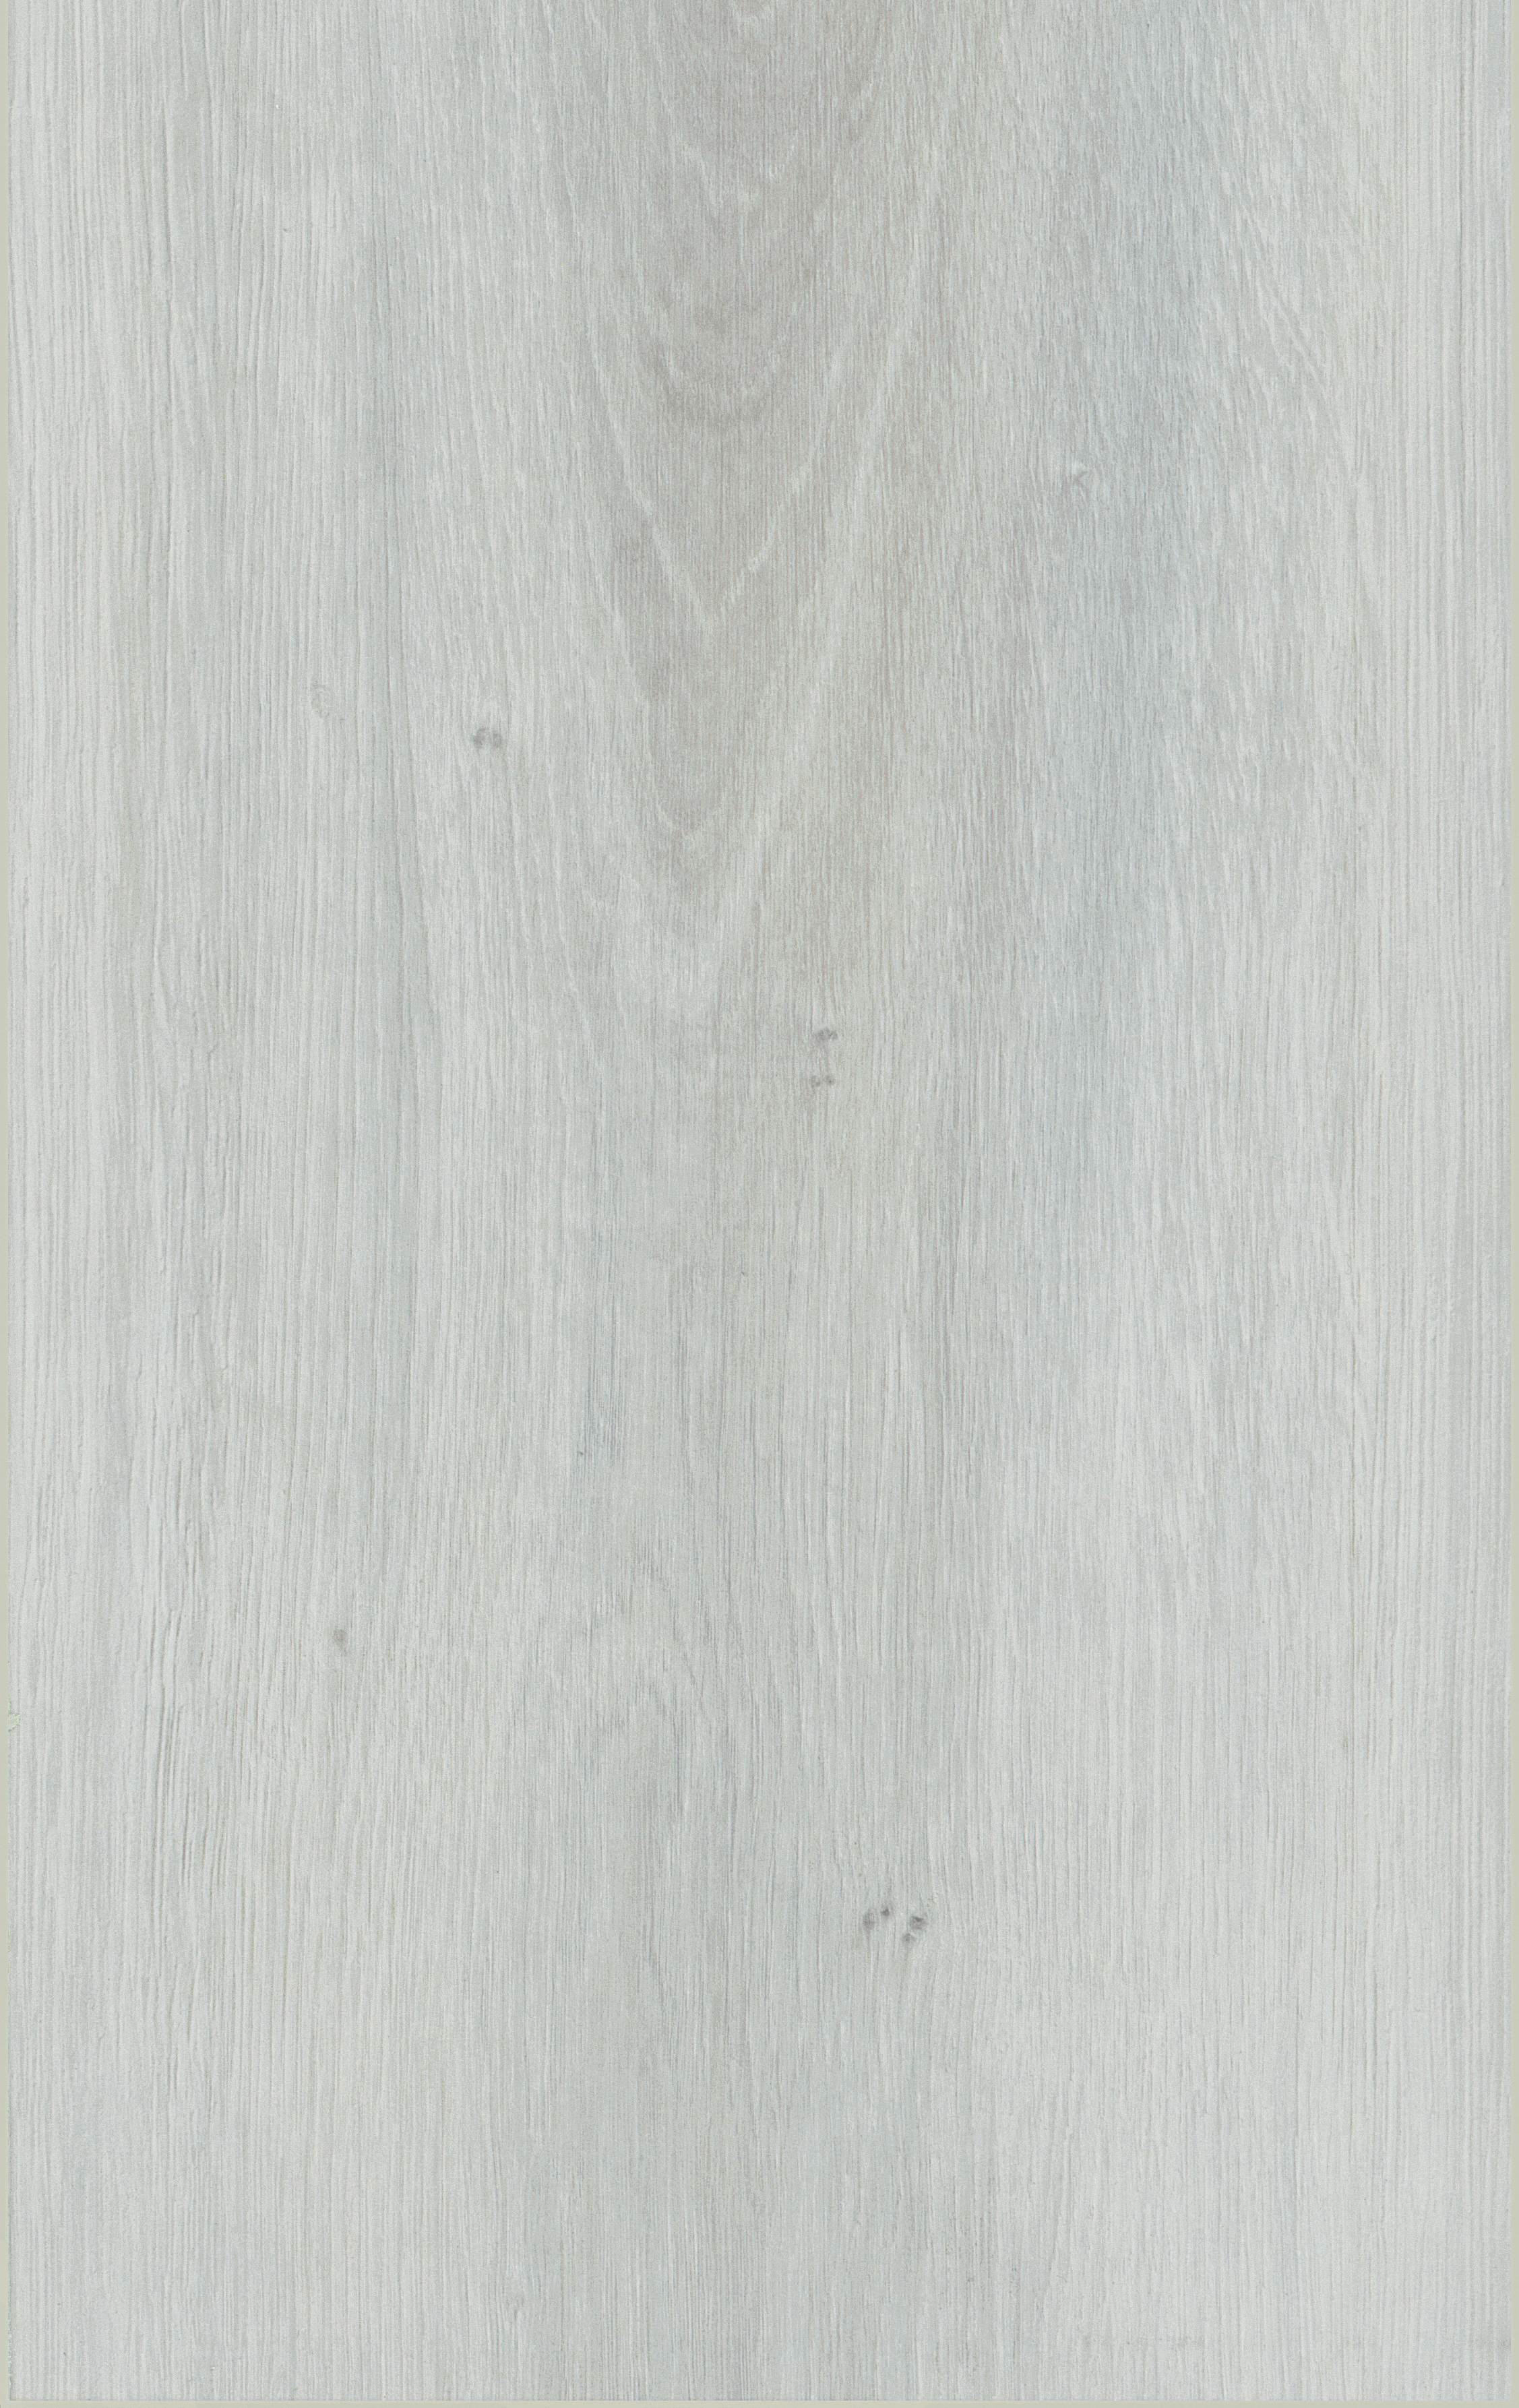 Hayfield Grey Oak 8mm Laminate Flooring - Sample